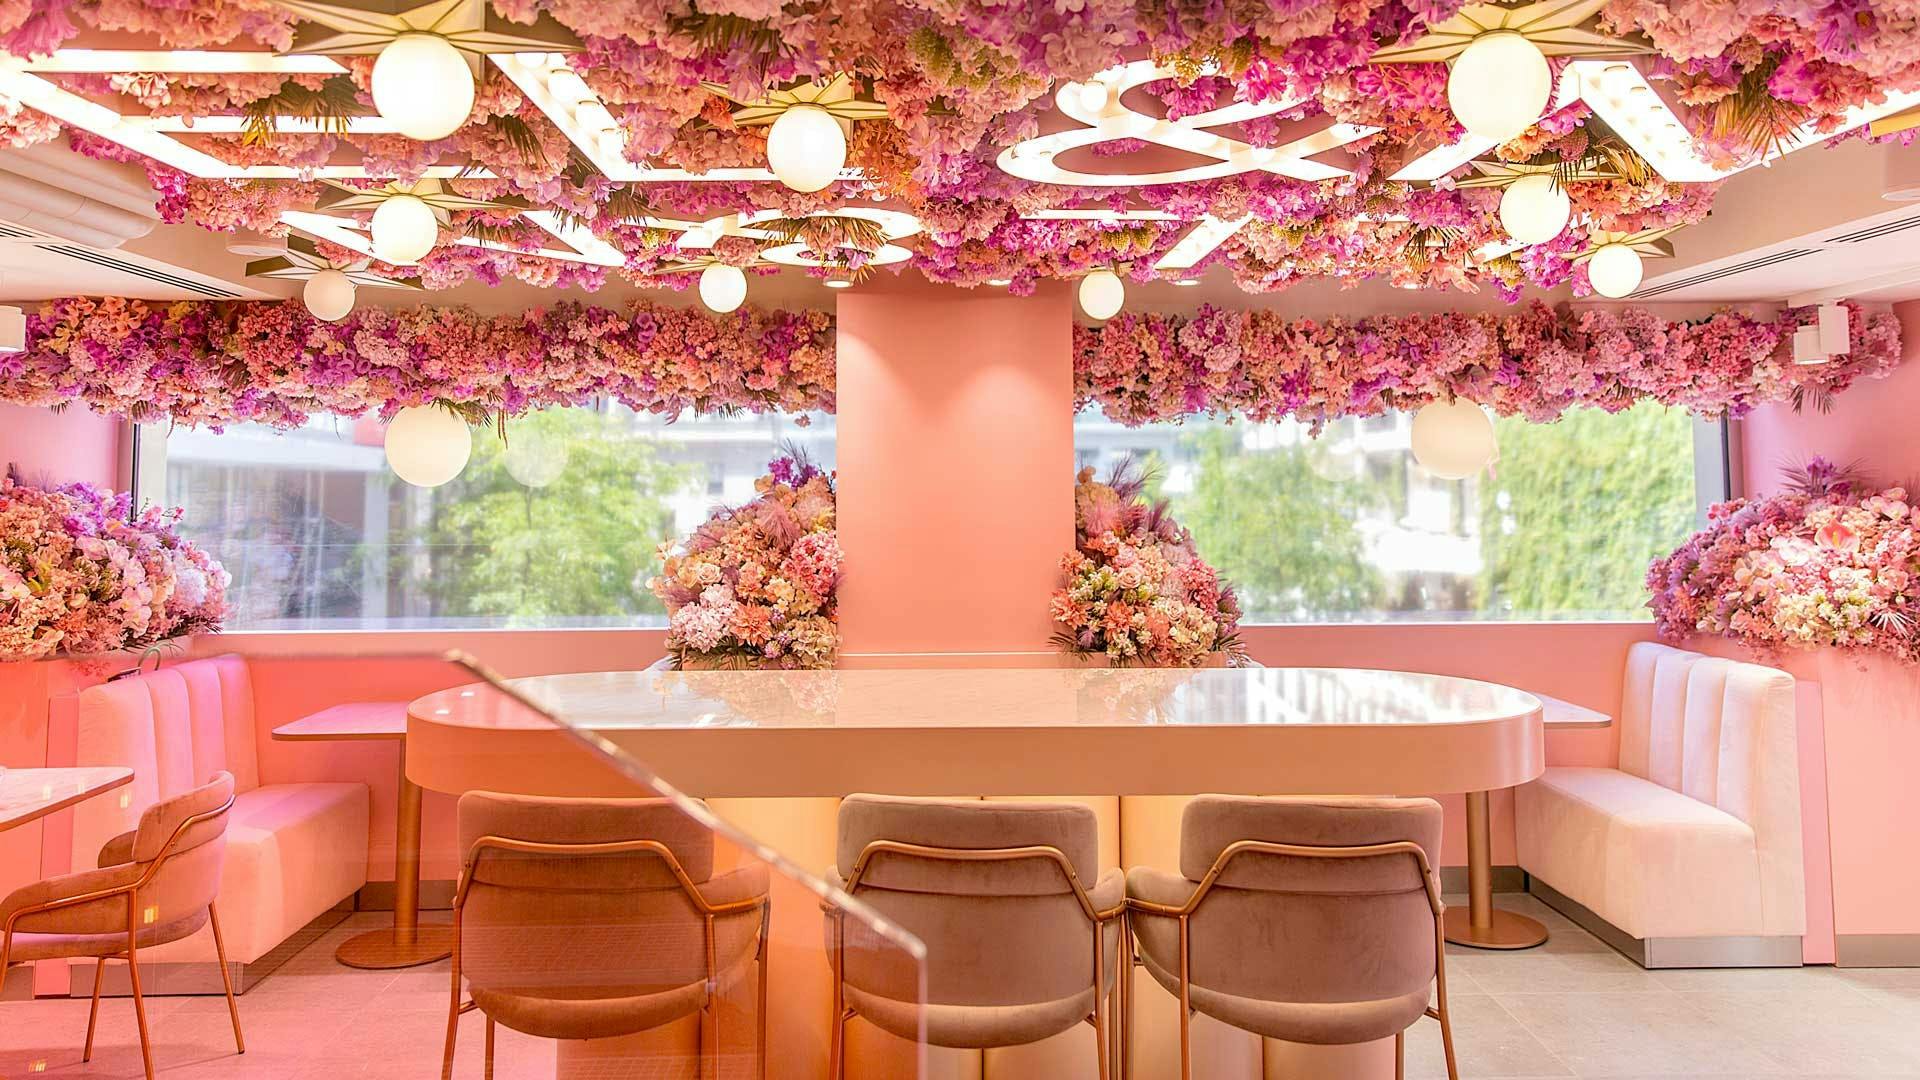 chair furniture interior design indoors room plant lobby reception flower blossom